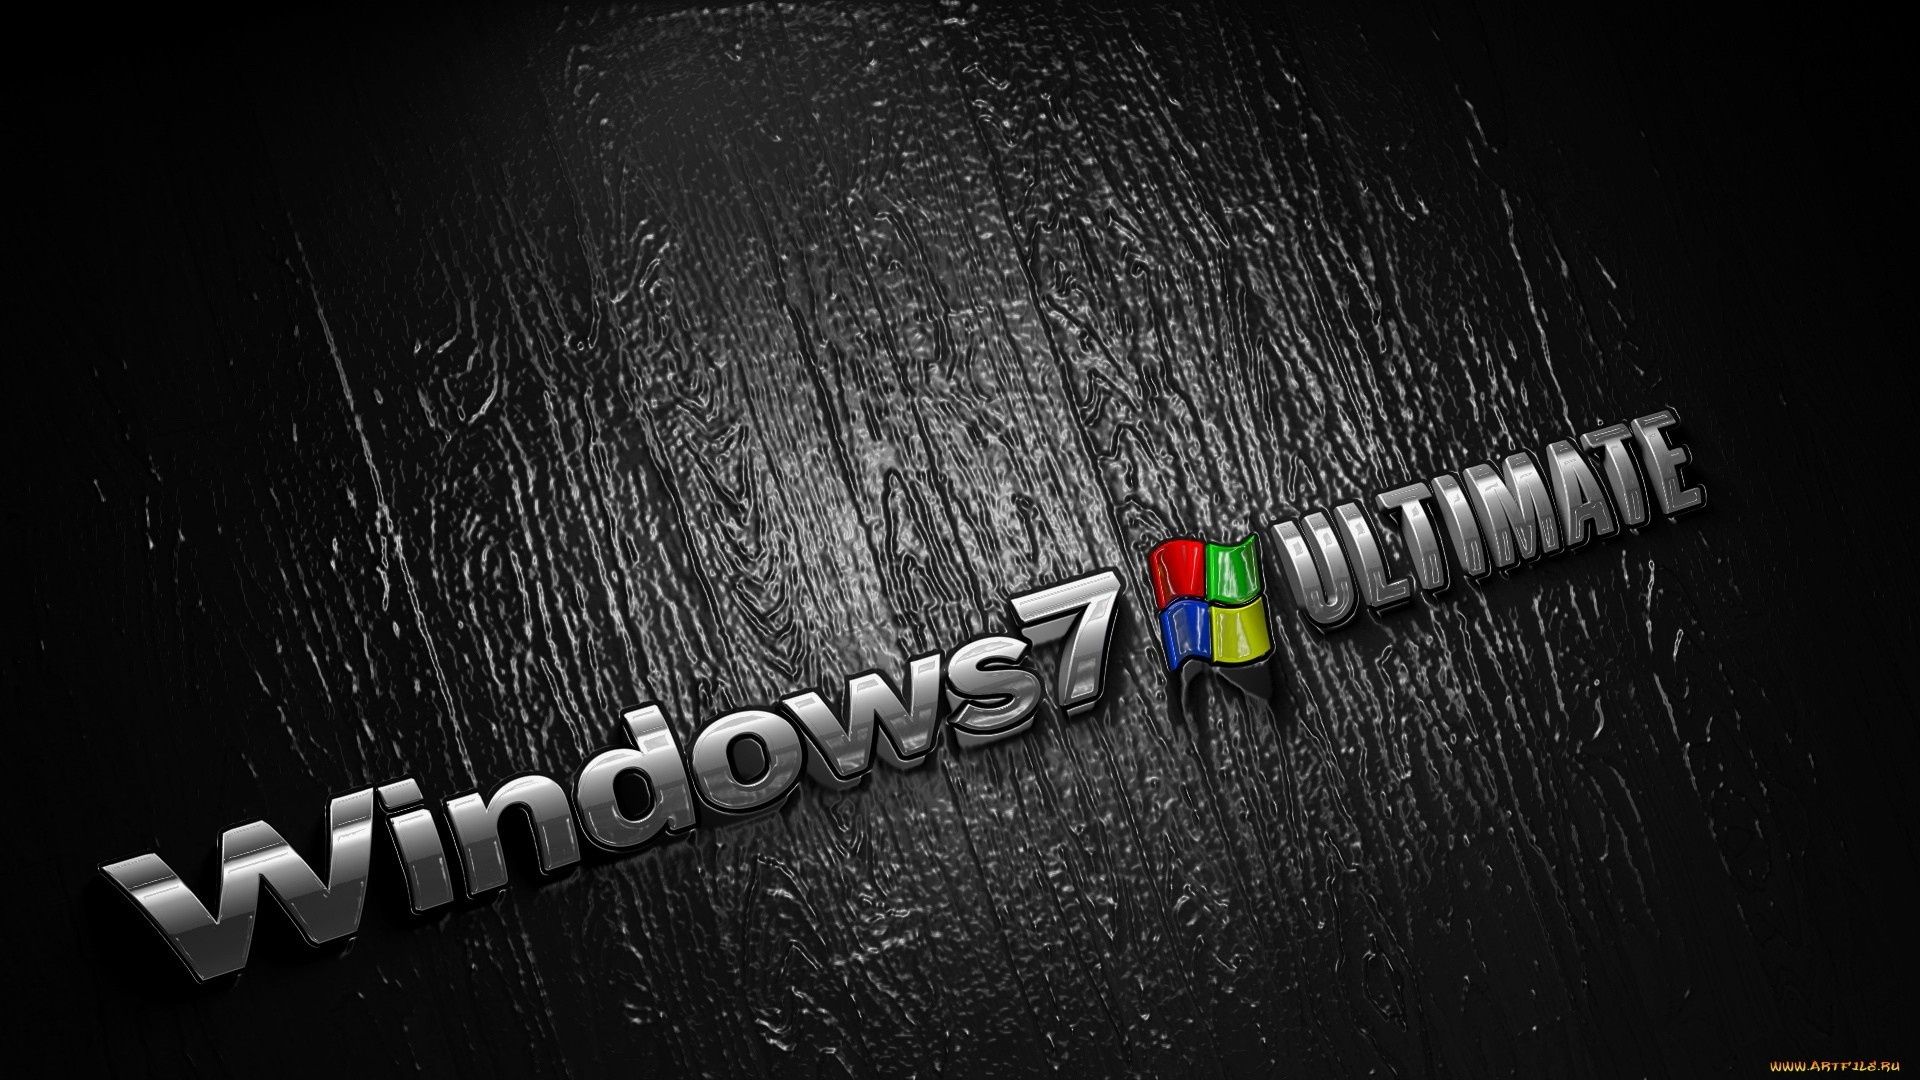 2 7 1024. Обои Windows. Обои леново. Заставка леново. Логотип Windows 7.